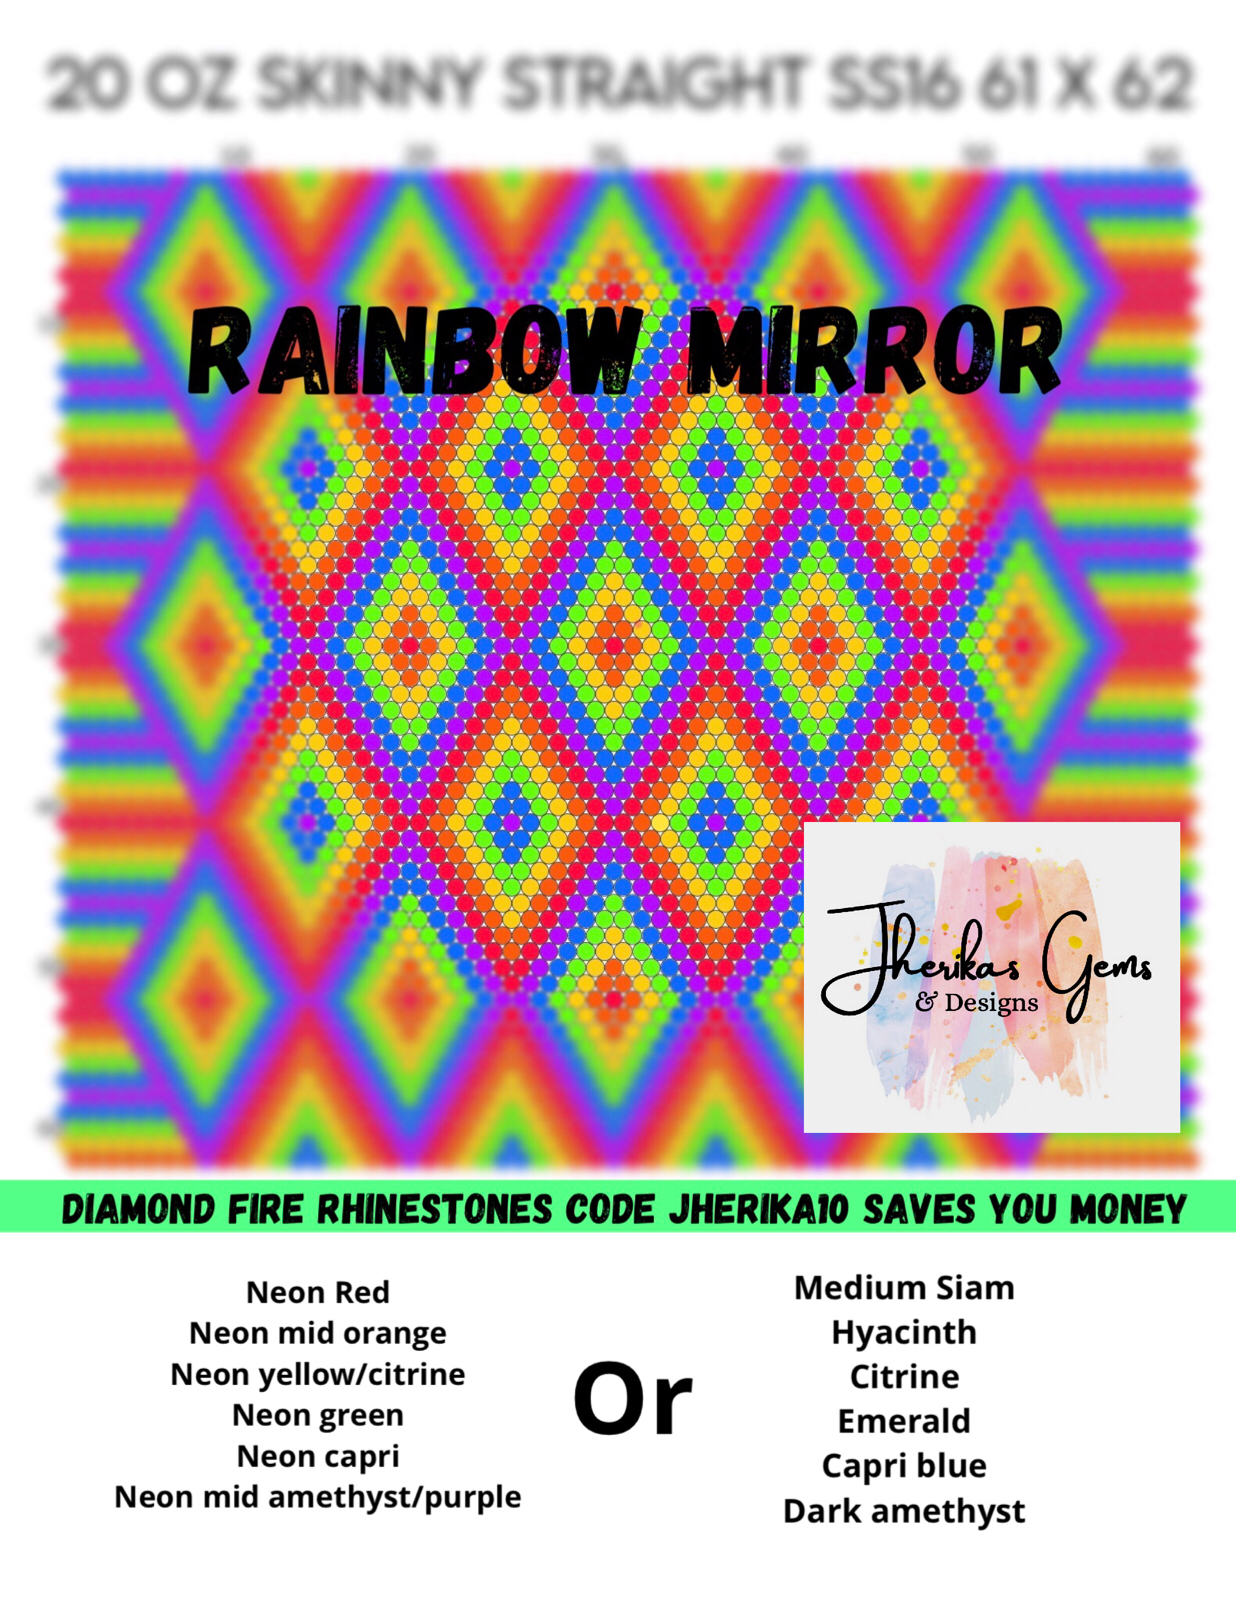 Rainbow Mirror SS16 20oz straight